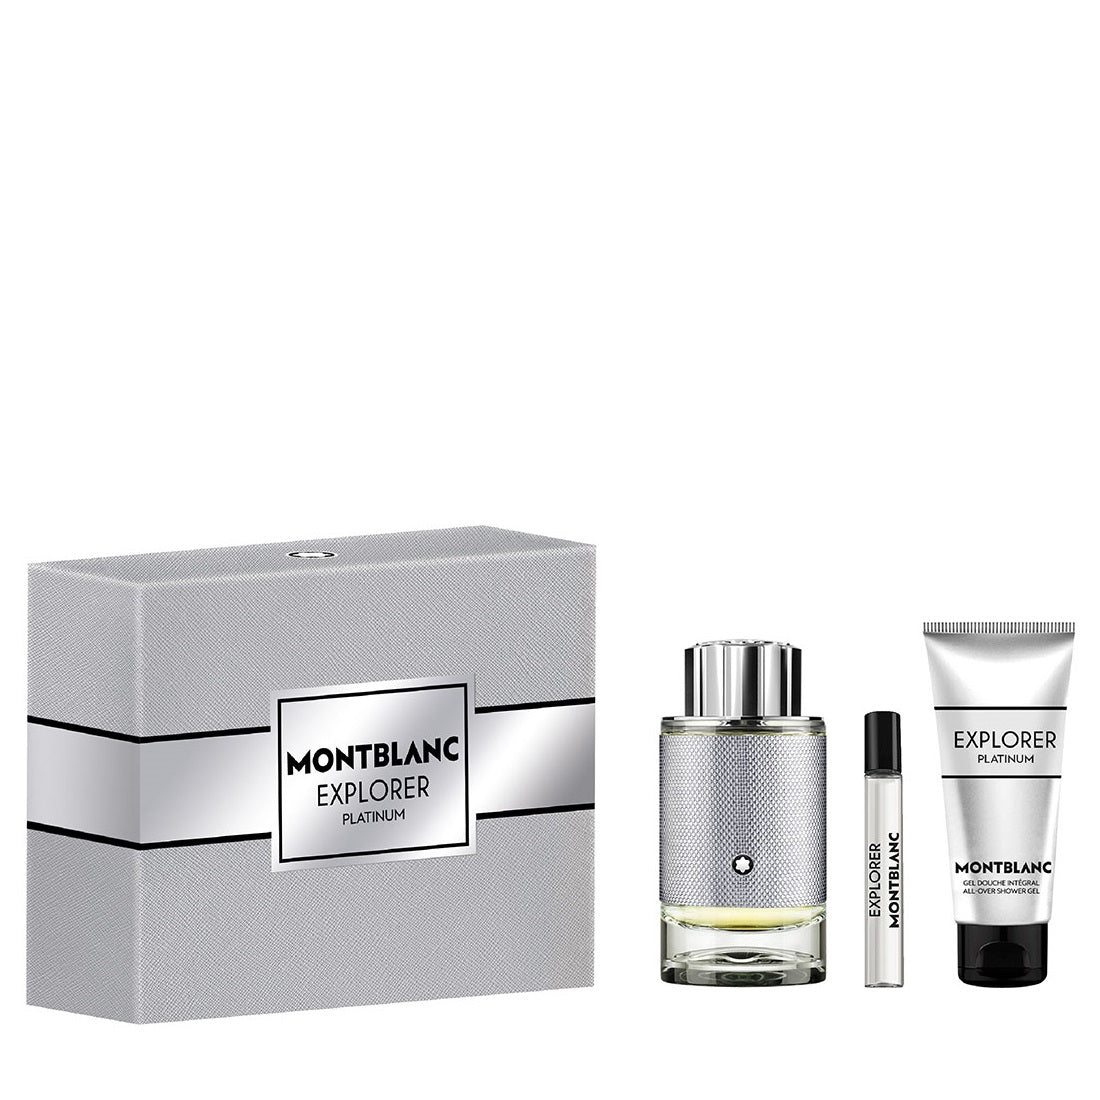 Montblanc Explorer Platinum EDP & Shower Gel Collection | My Perfume Shop Australia